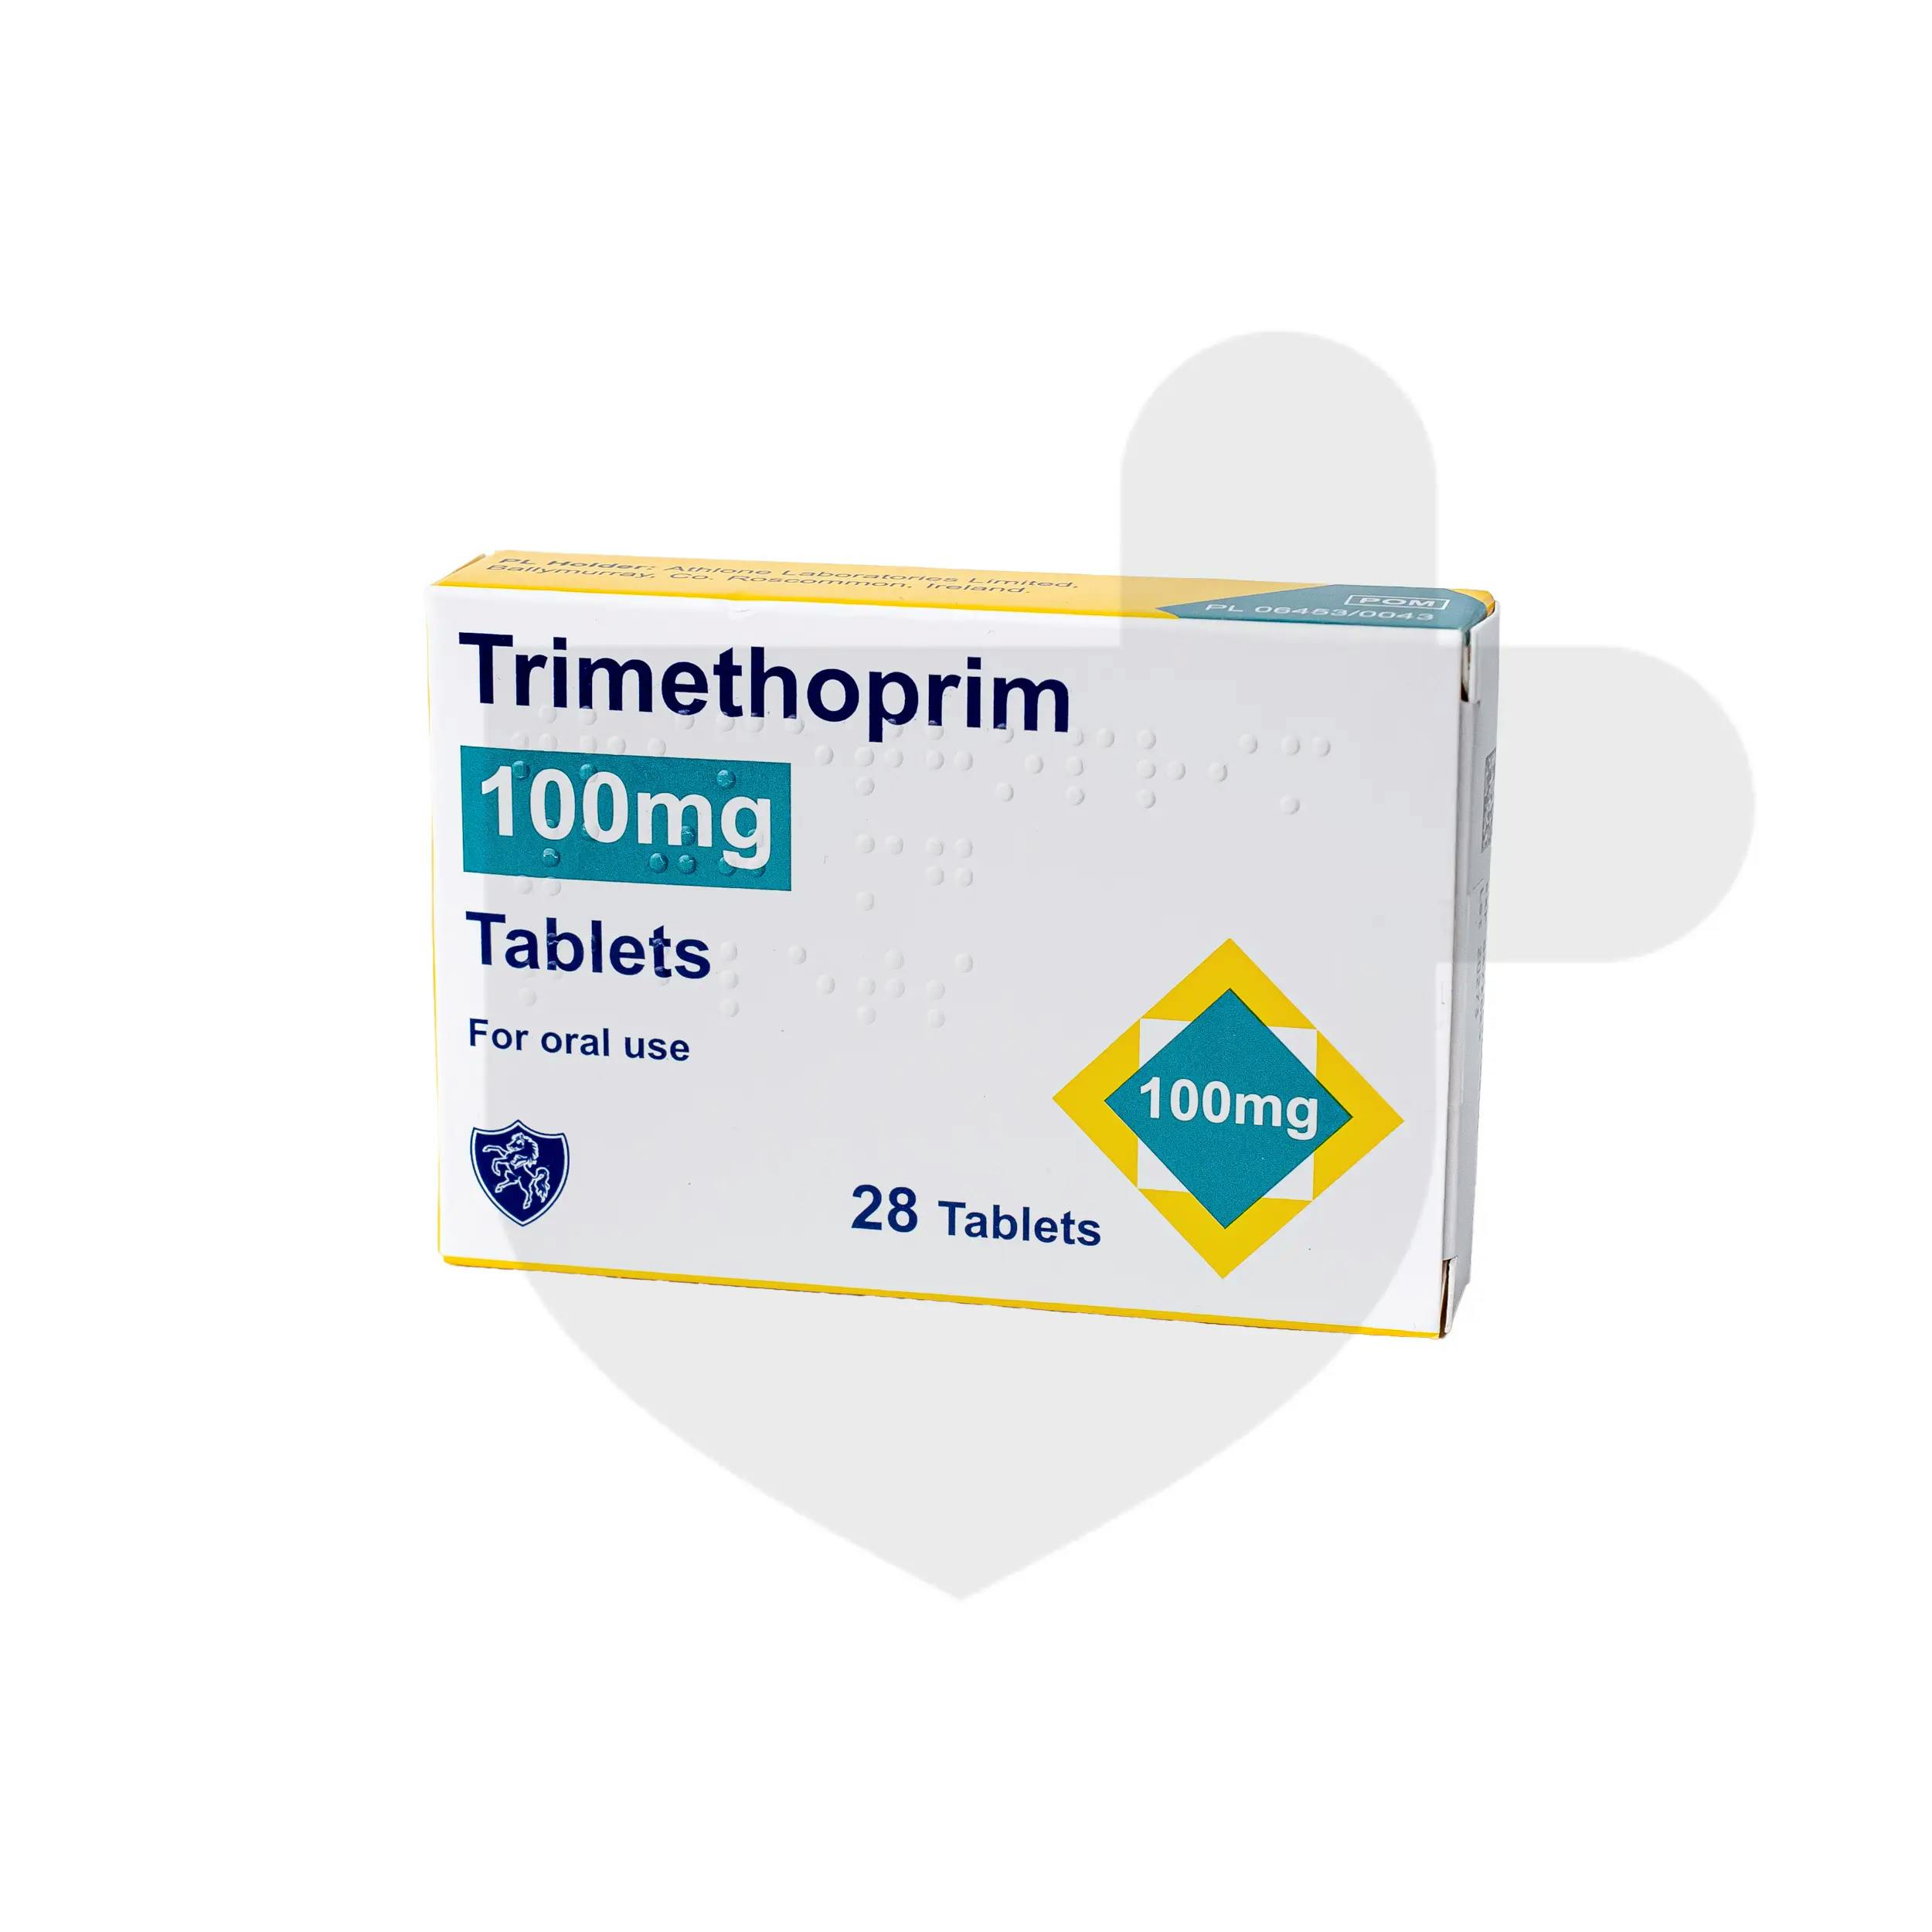 trimethoprim